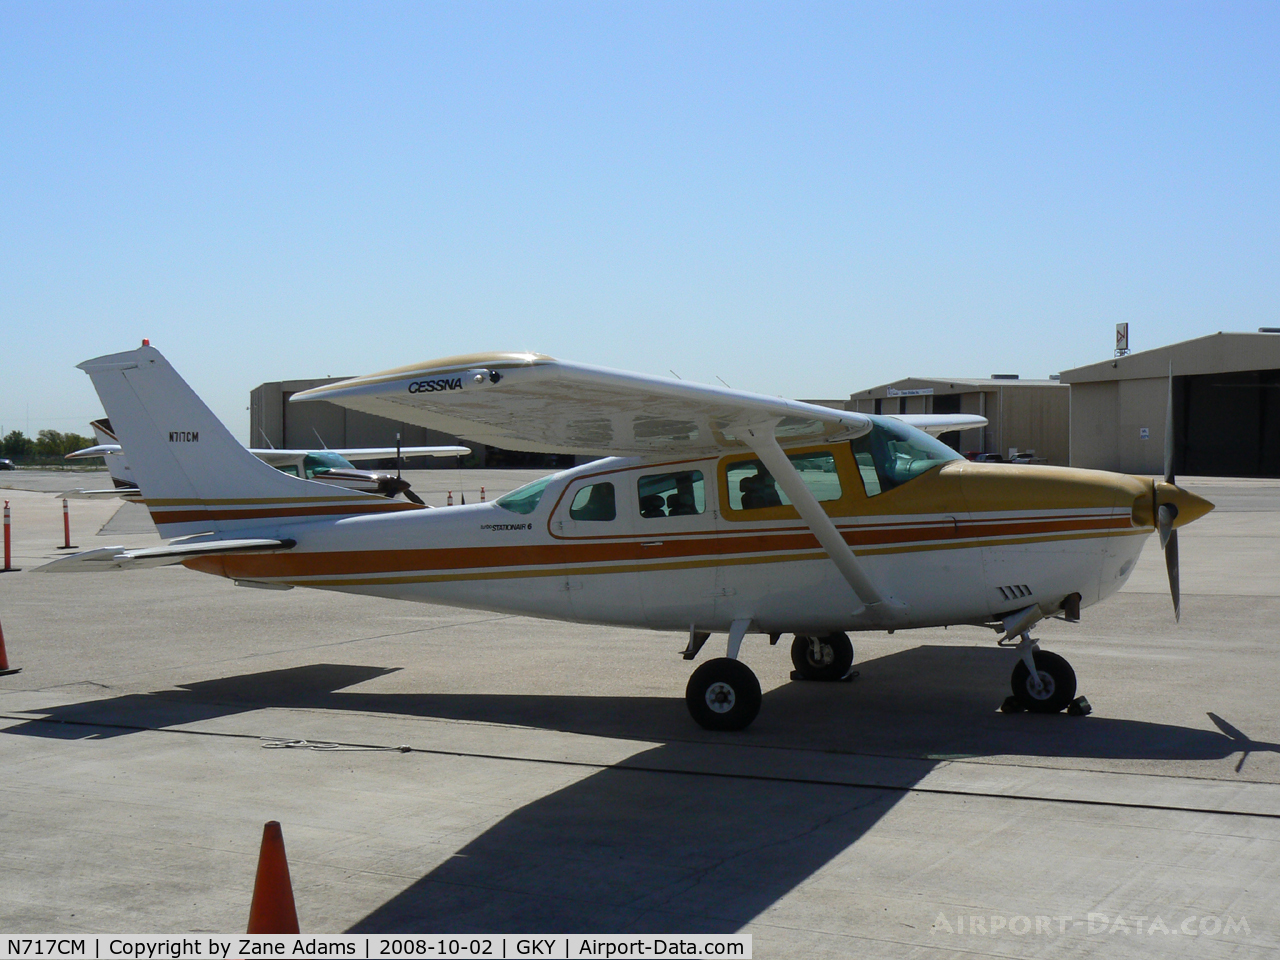 N717CM, 1979 Cessna TU206G Turbo Stationair C/N U20605155, At Meacham Field